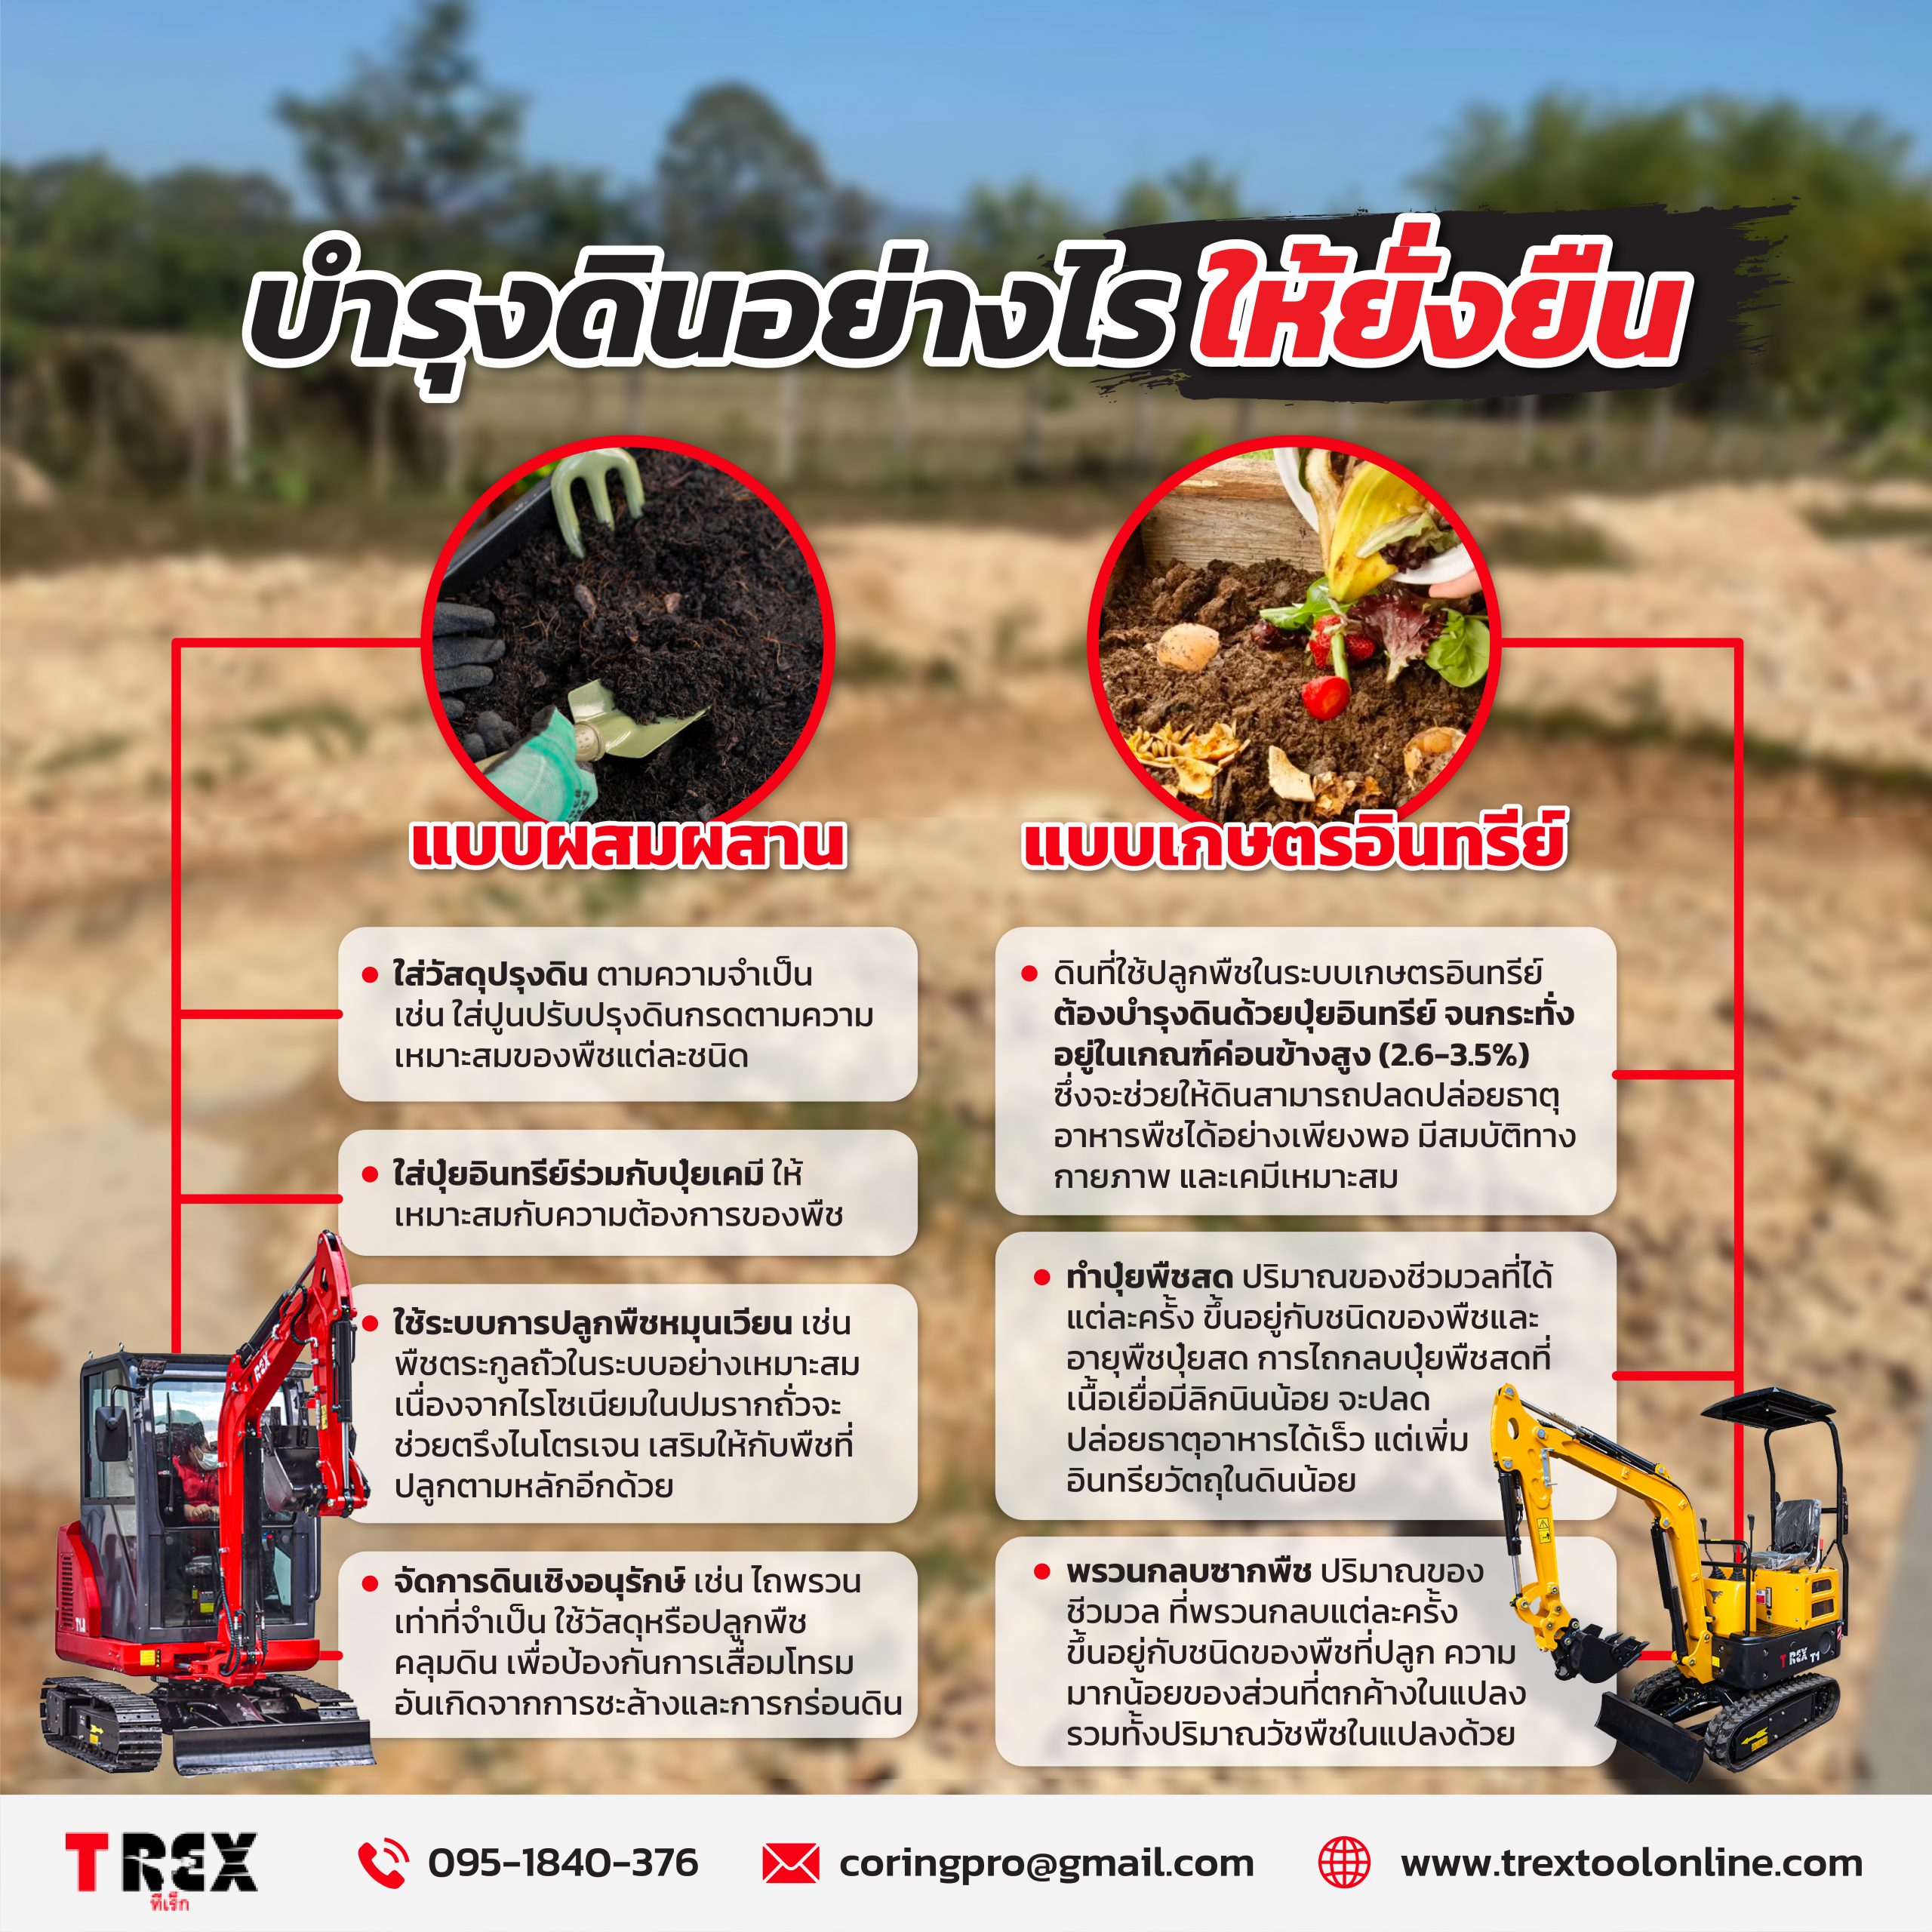 How to use mini excavator trex to improve soil in the farm